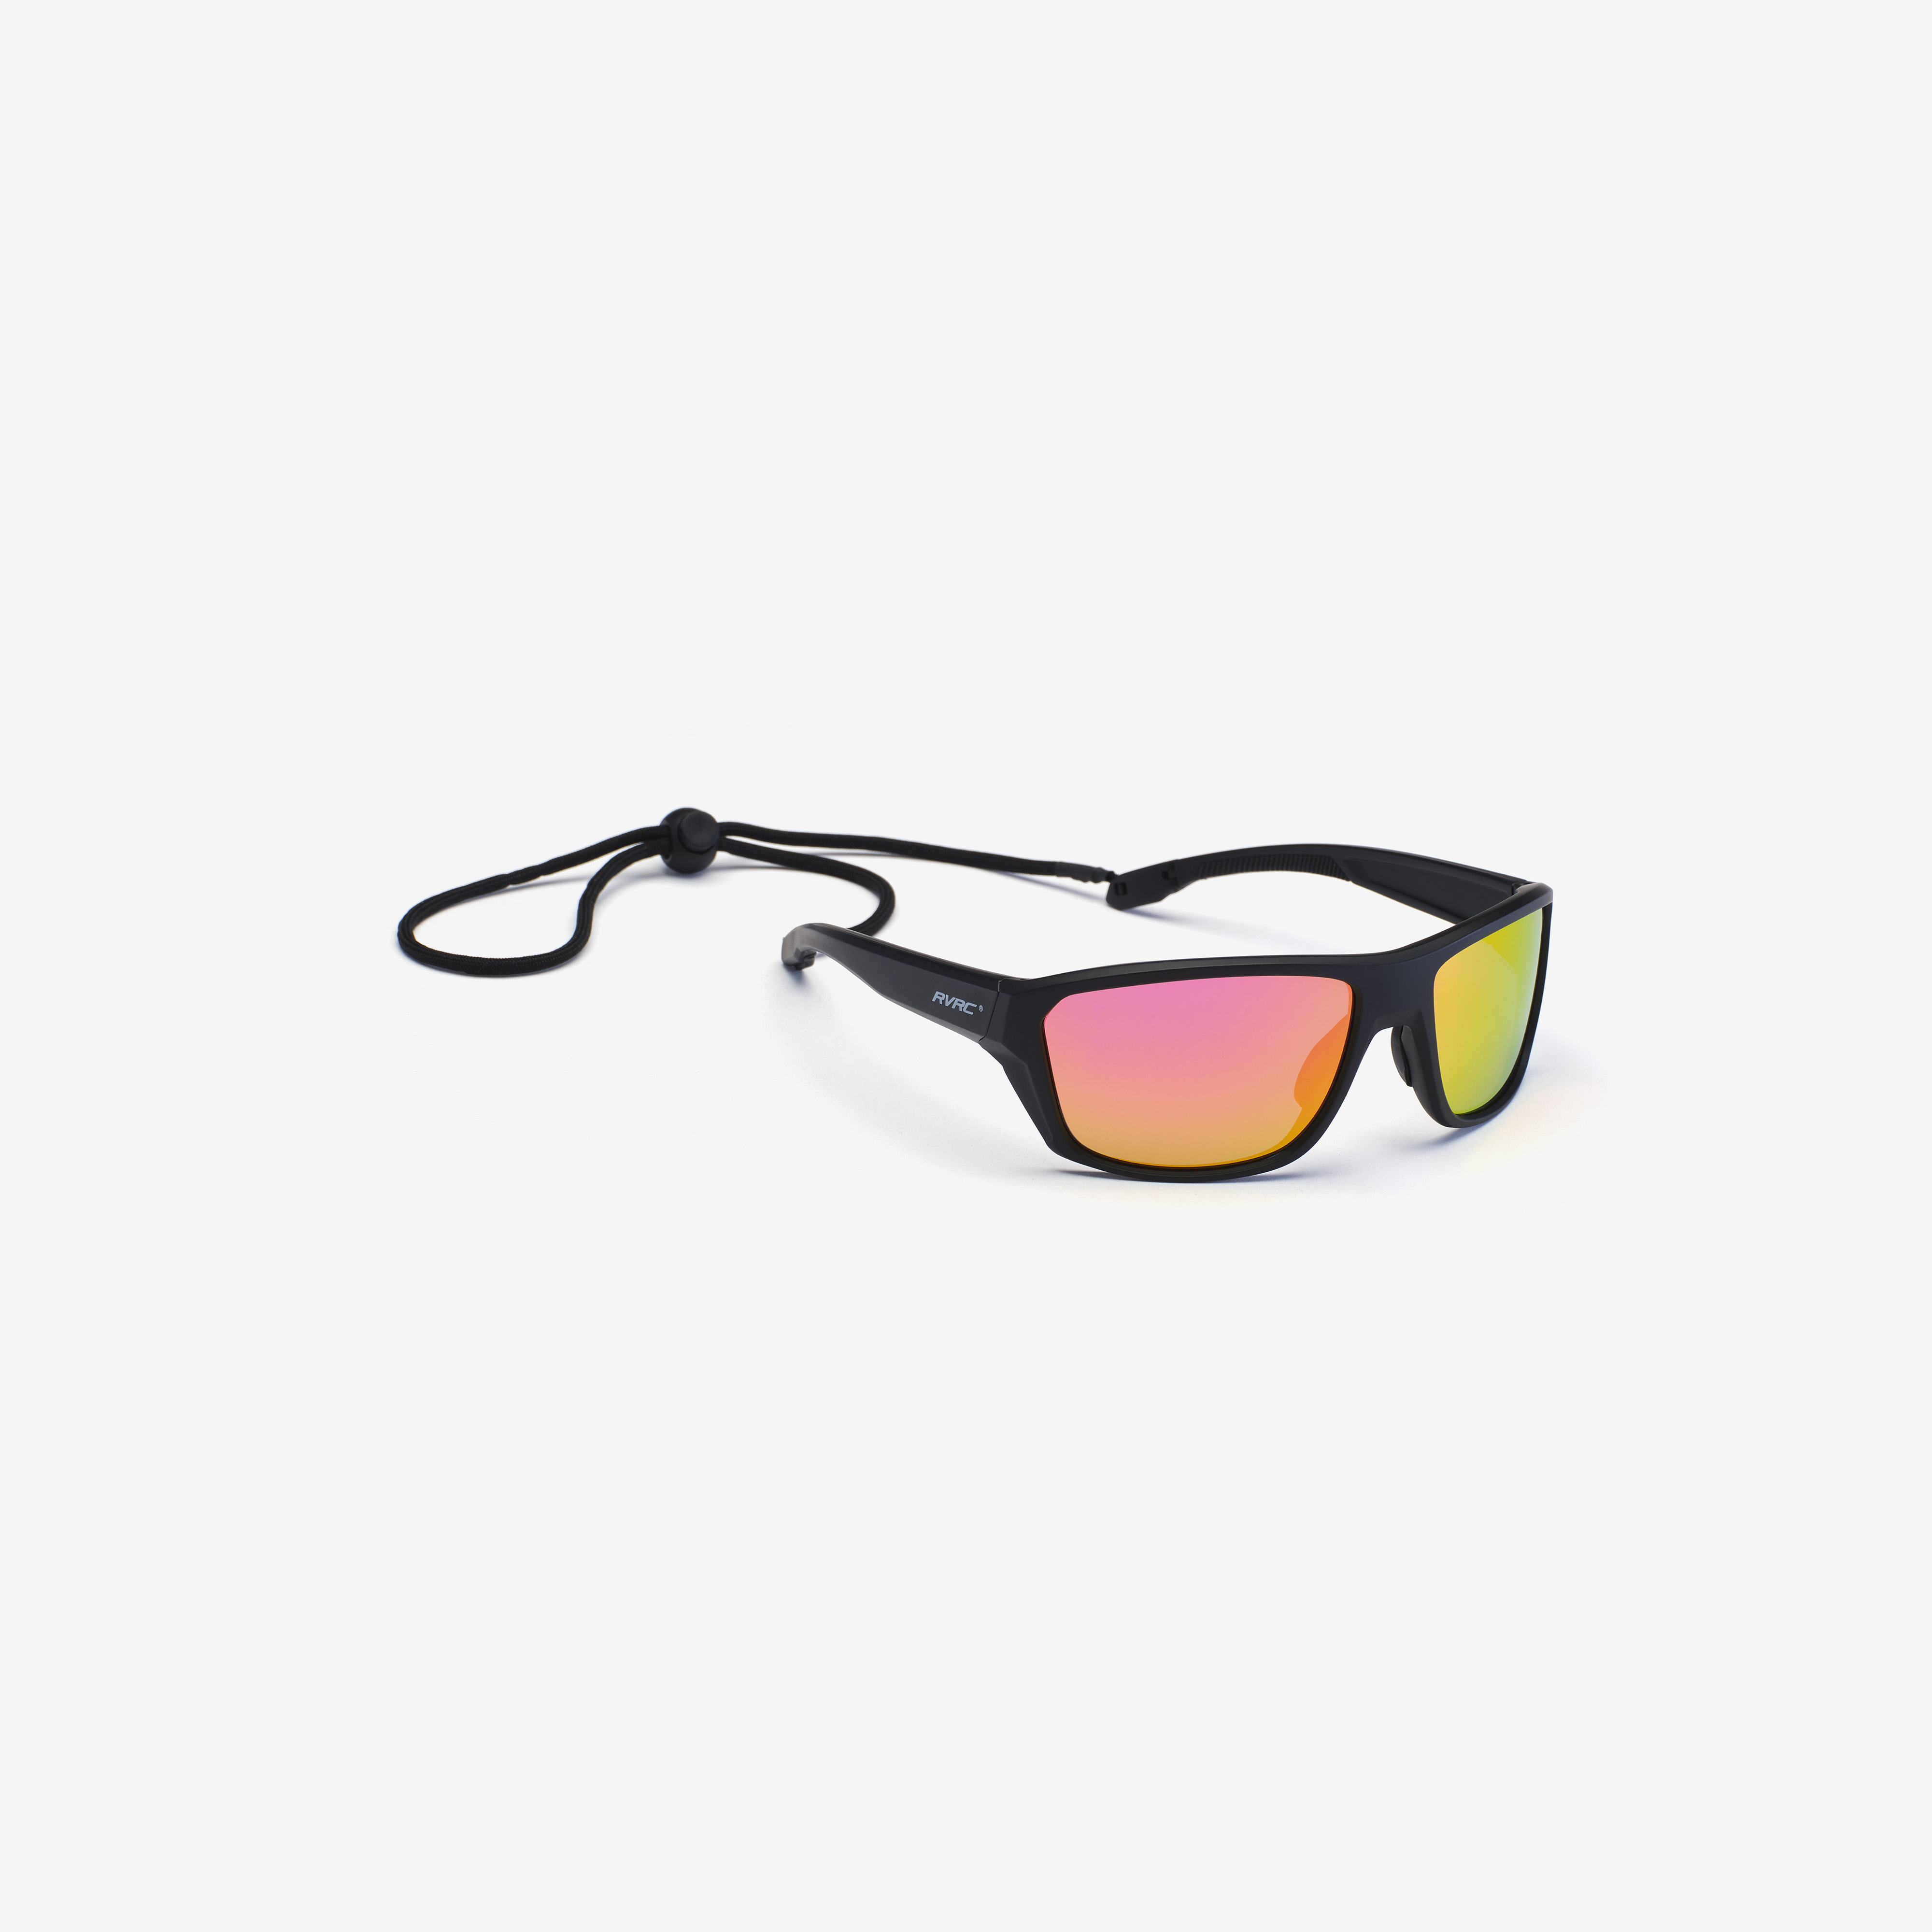 Virgo Polarized Sports Sunglasses Black/Pink Coral